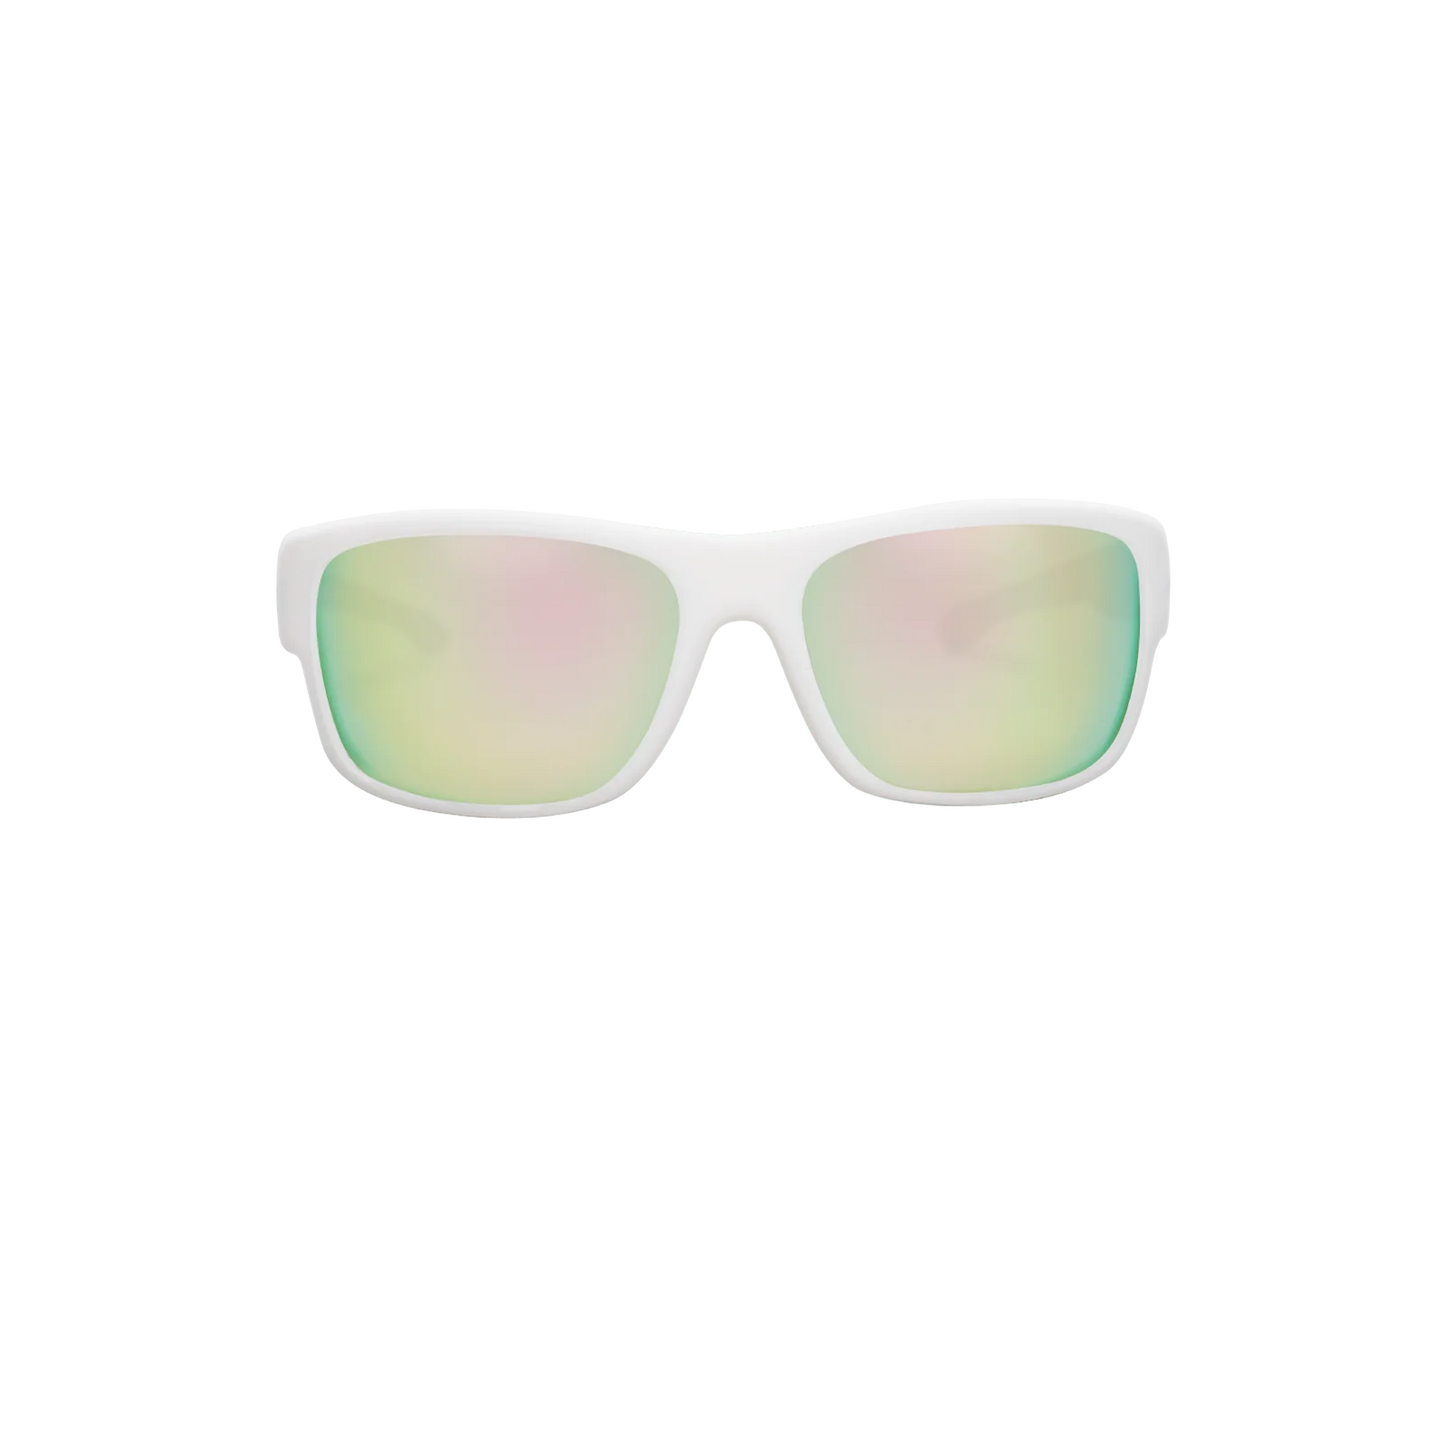 Aztron Avatar Sunglasses